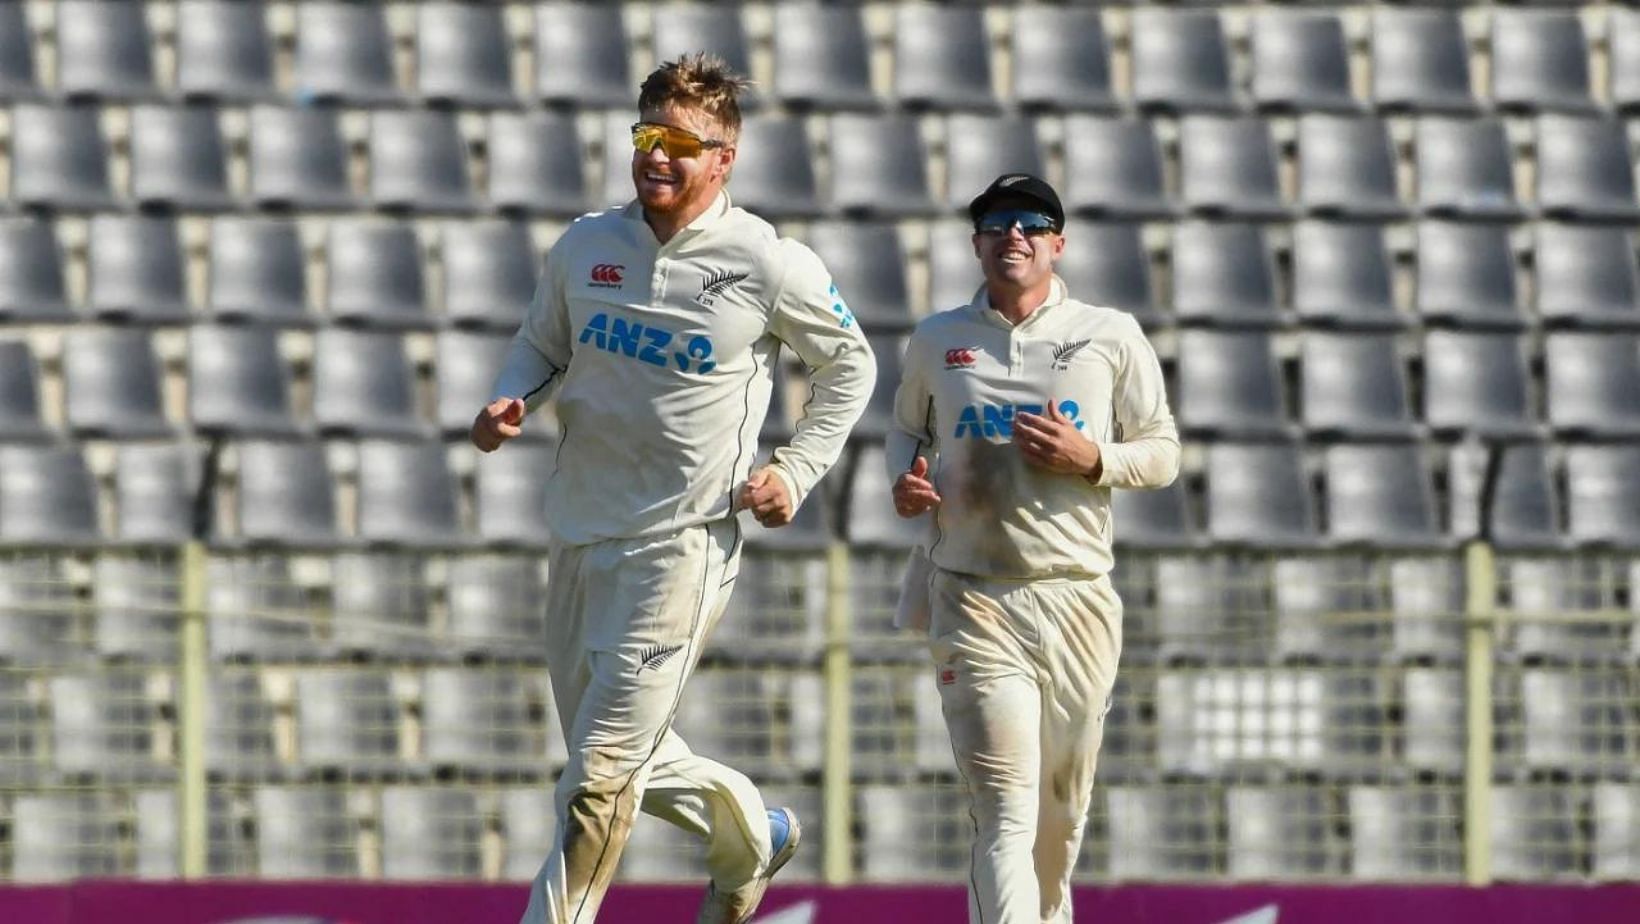 Glenn Phillips celebrating a wicket on Tuesday.